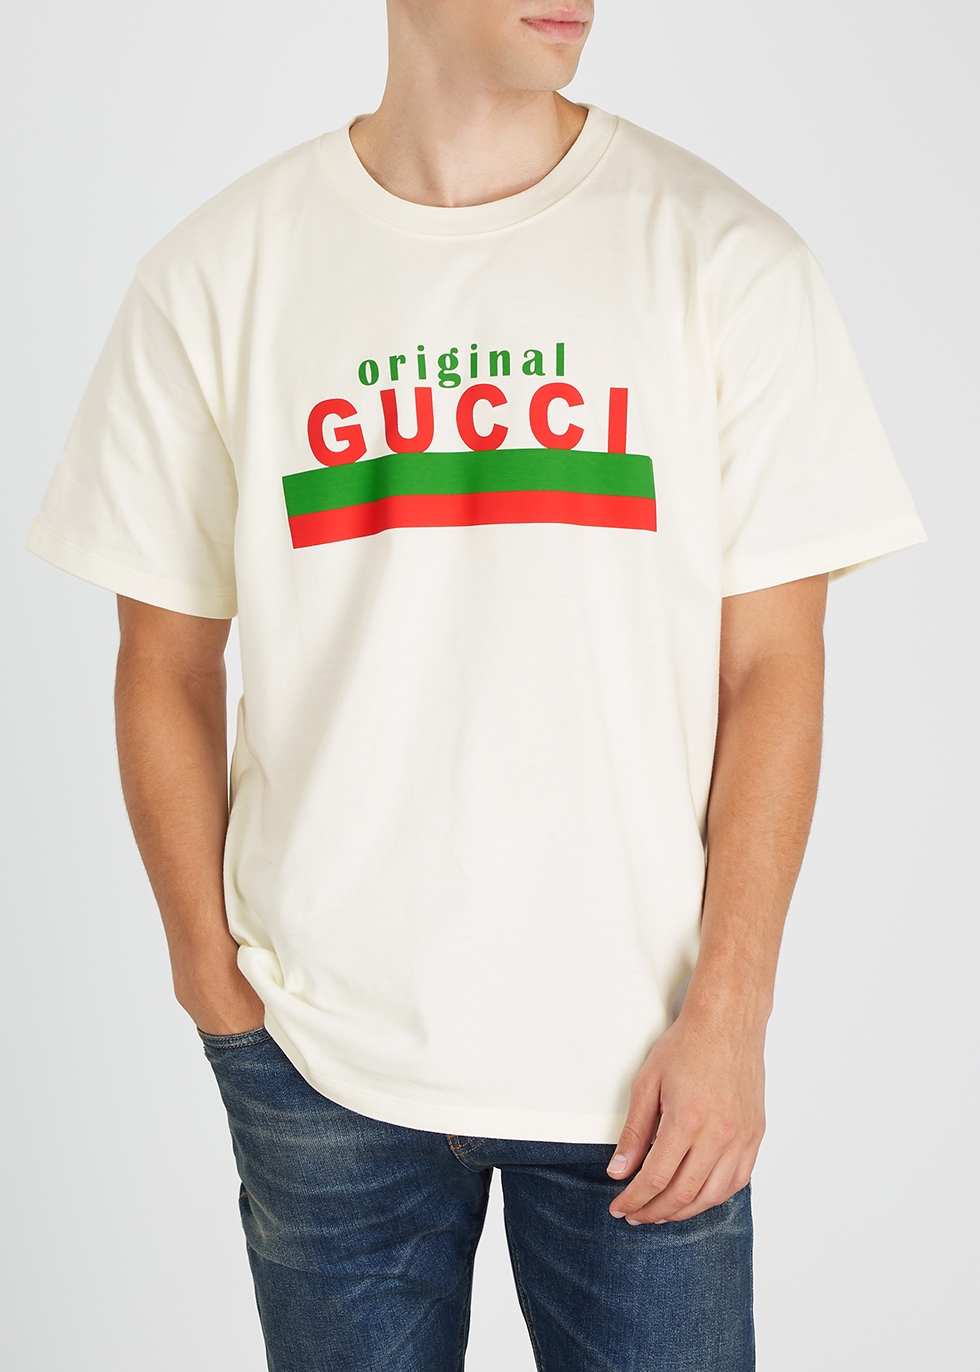 original gucci shirt